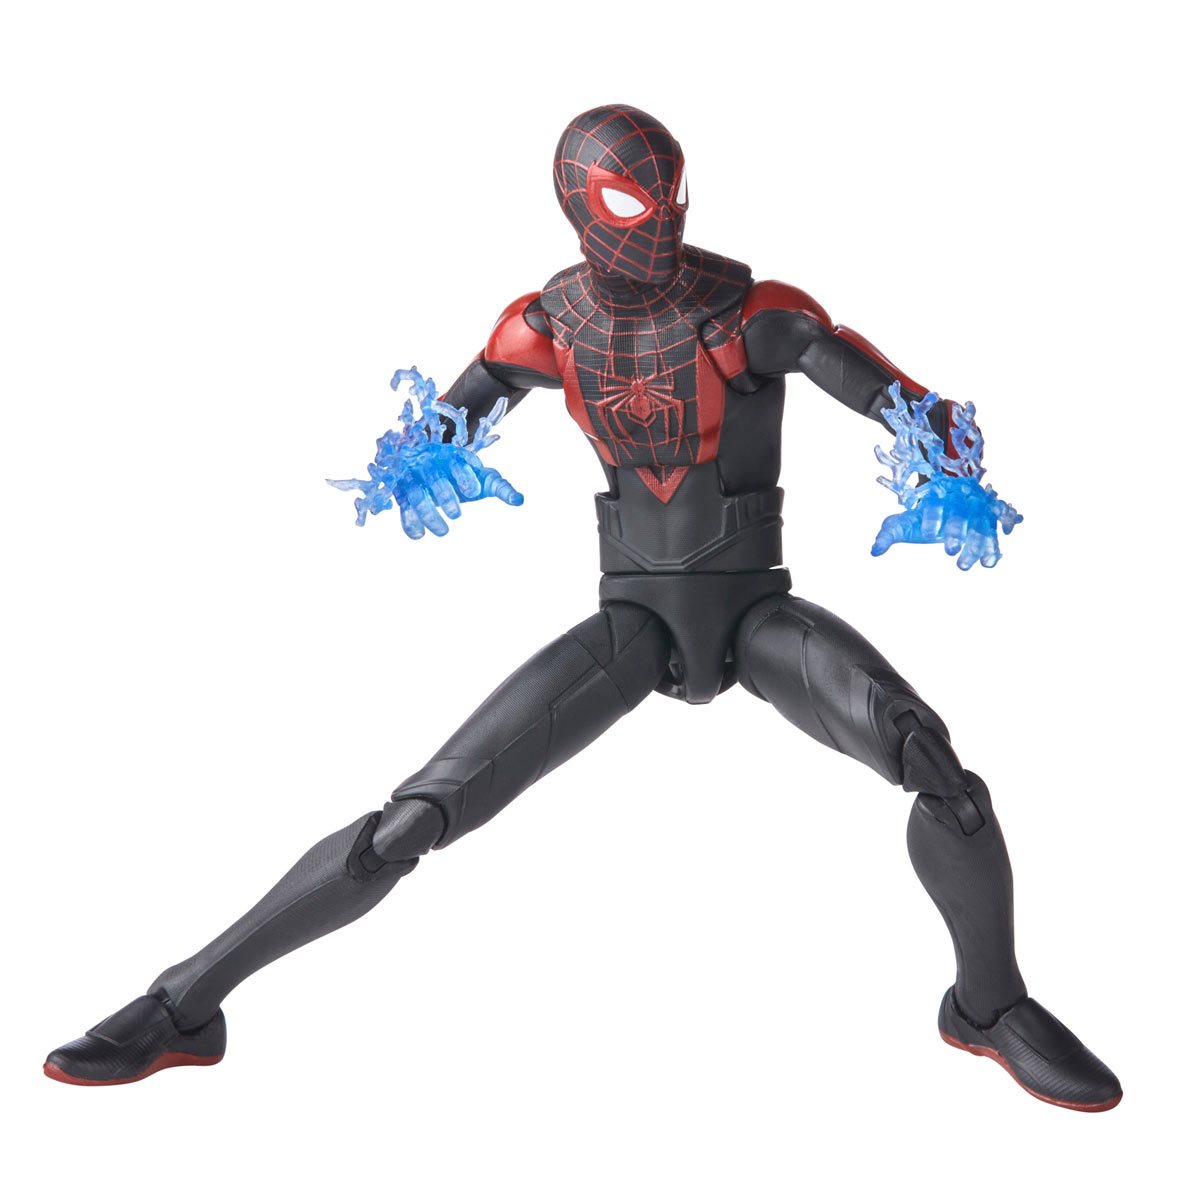 Spider-Man Marvel Legends Gamerverse Miles Morales Hasbro